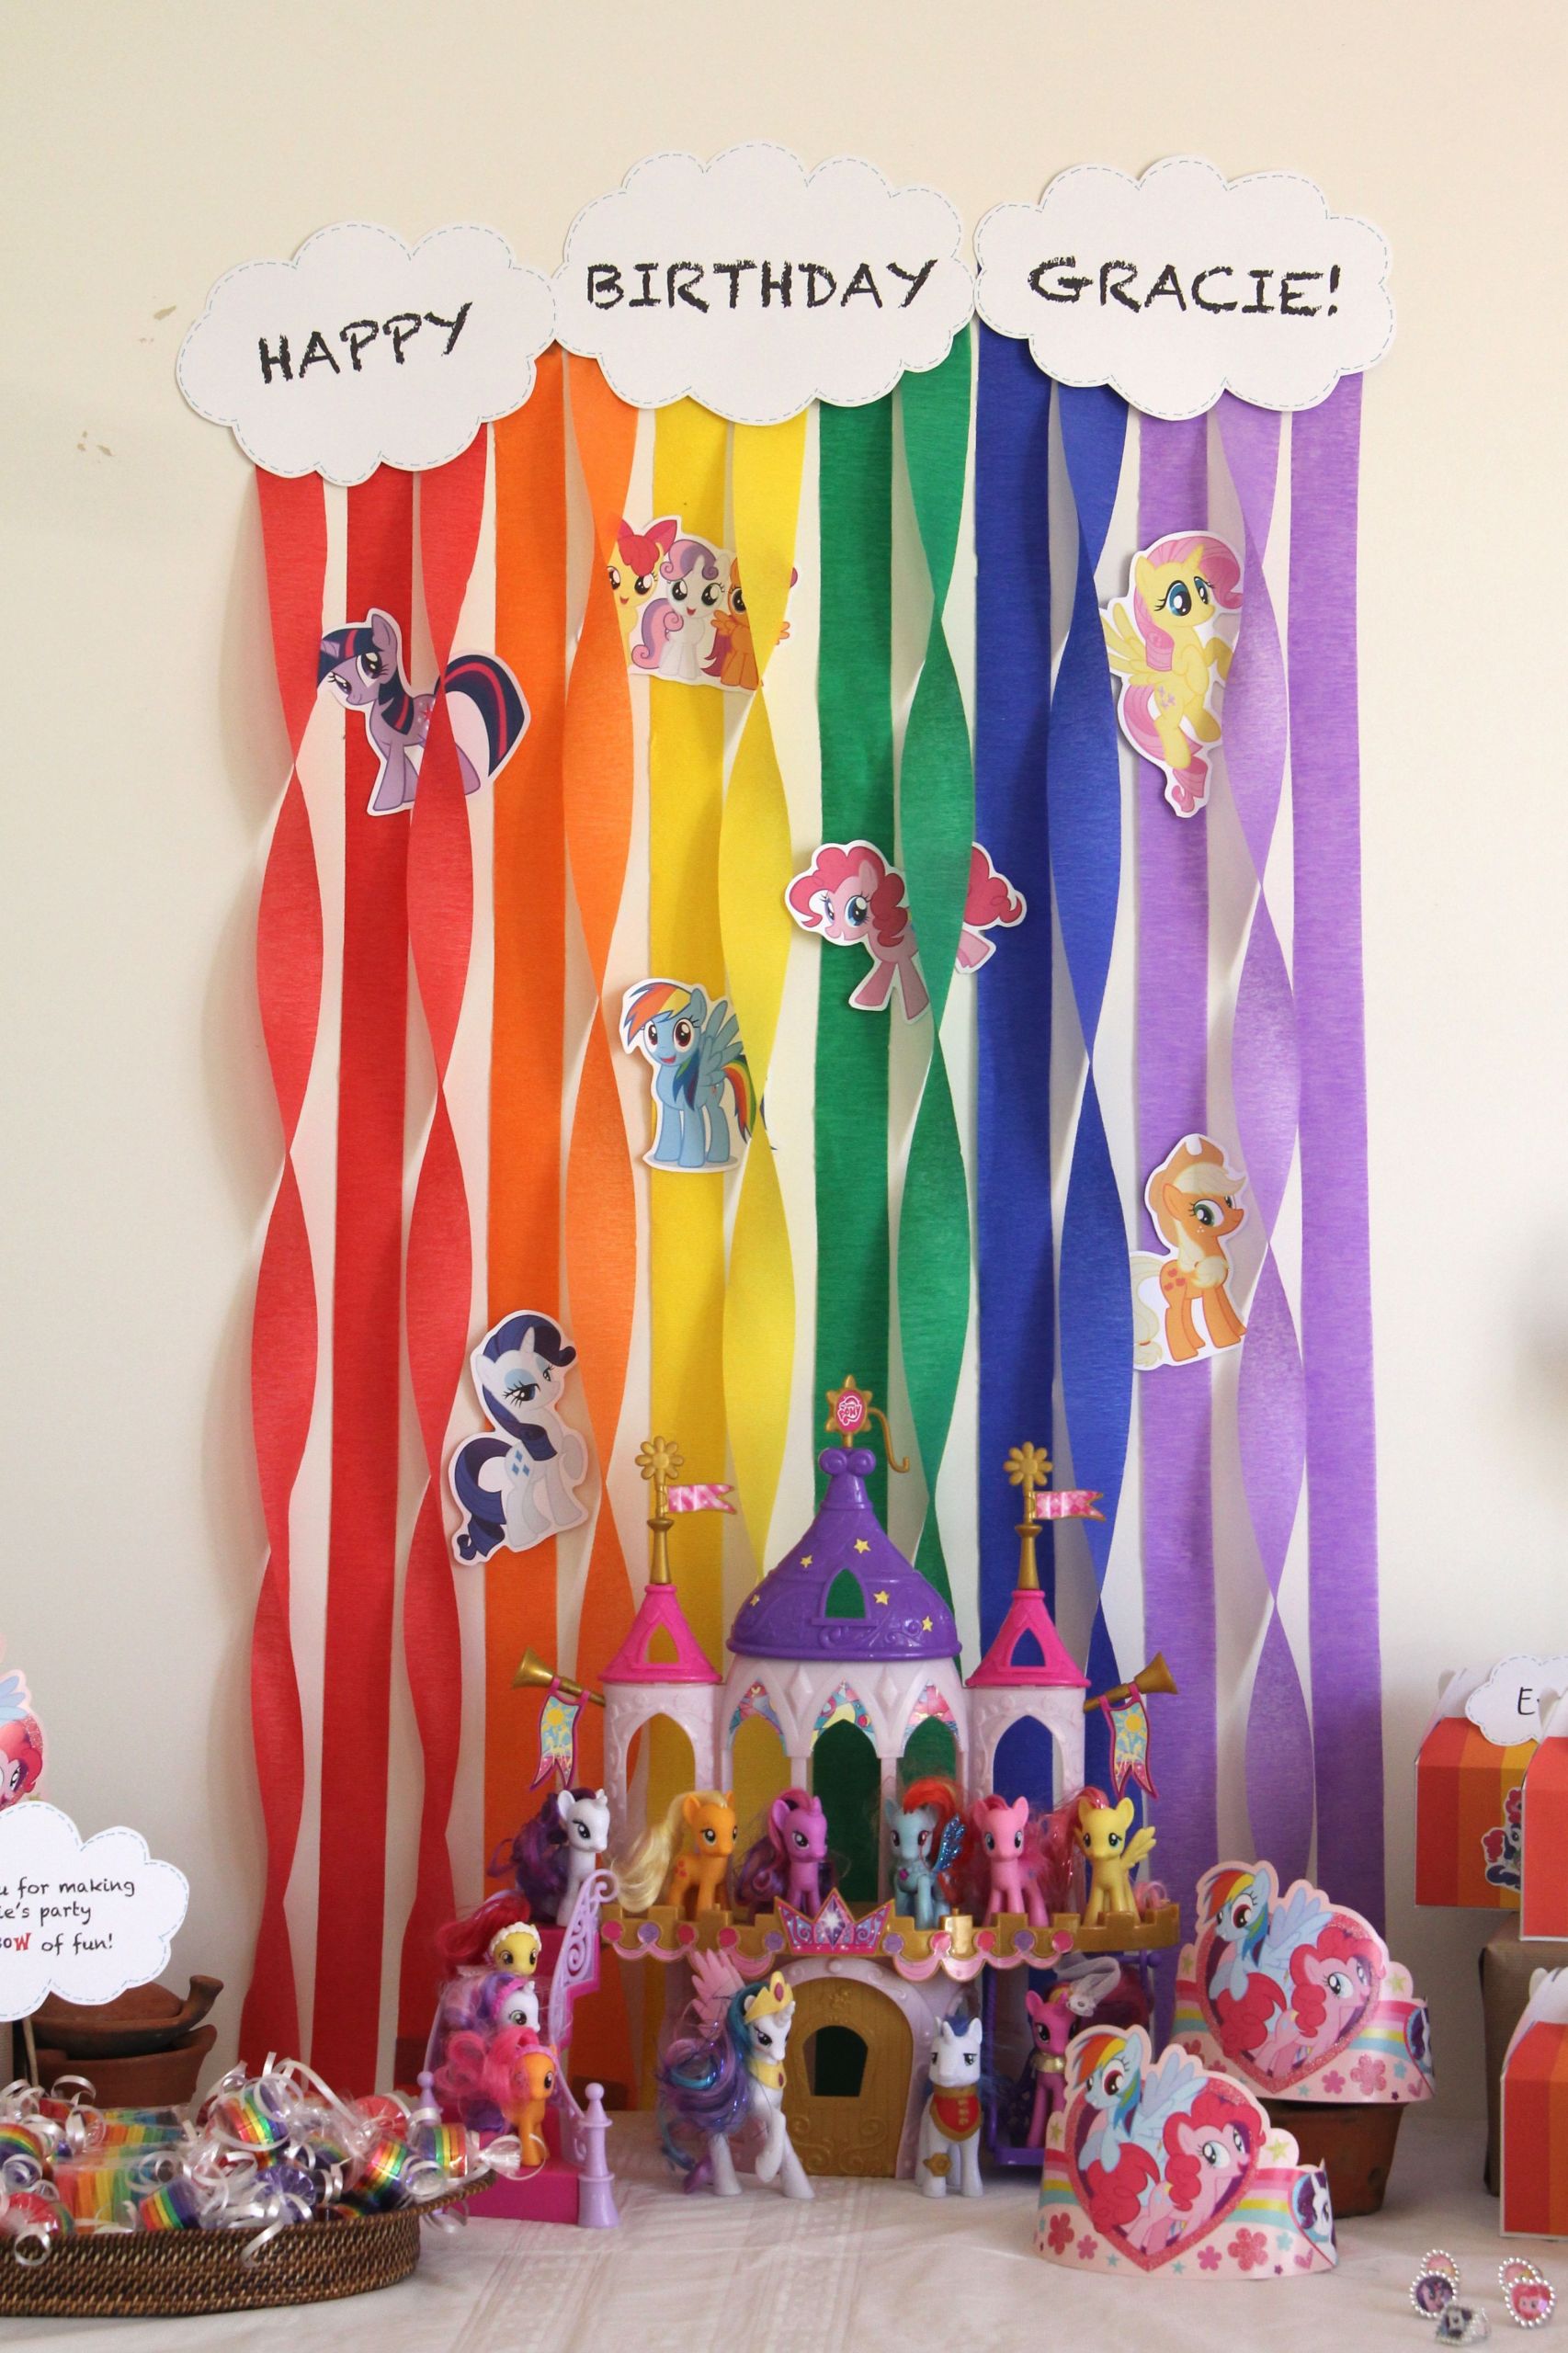 Streamer Decoration Ideas For Birthday Party
 Gracie s My Little Pony Rainbow Birthday Party streamer